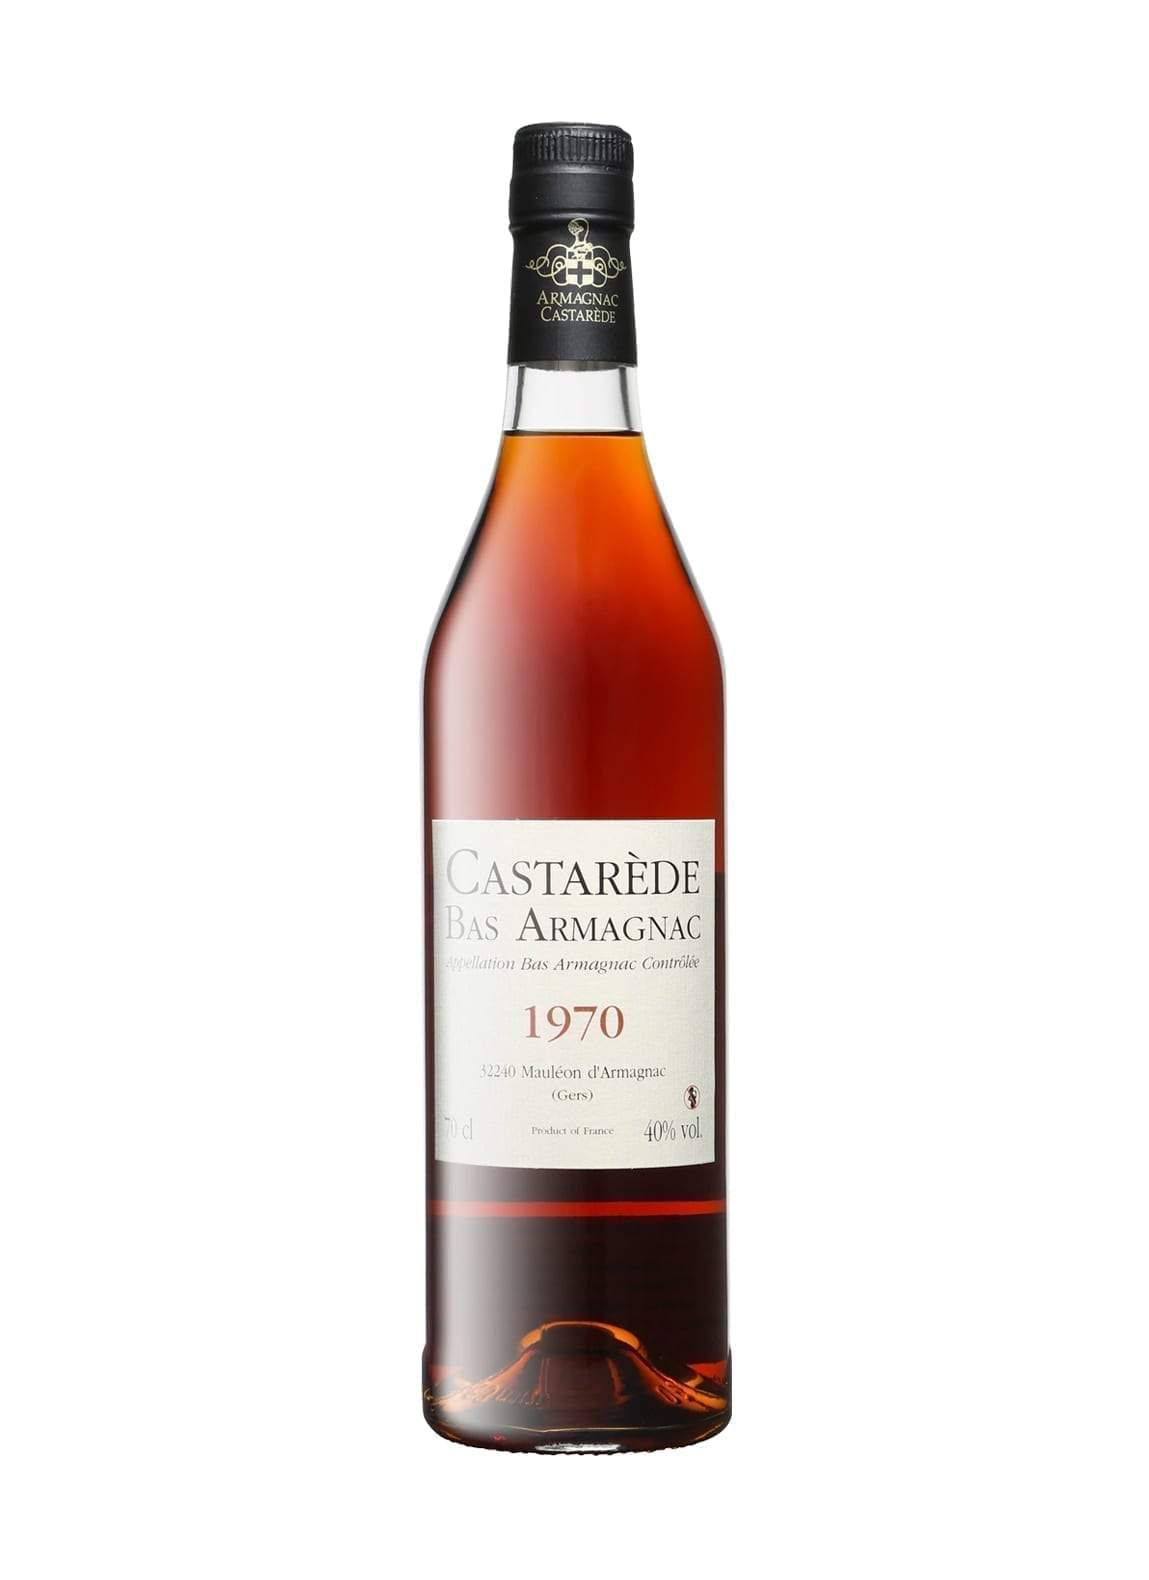 Castarede 1970 Bas Armagnac 40% 700ml | Brandy | Shop online at Spirits of France